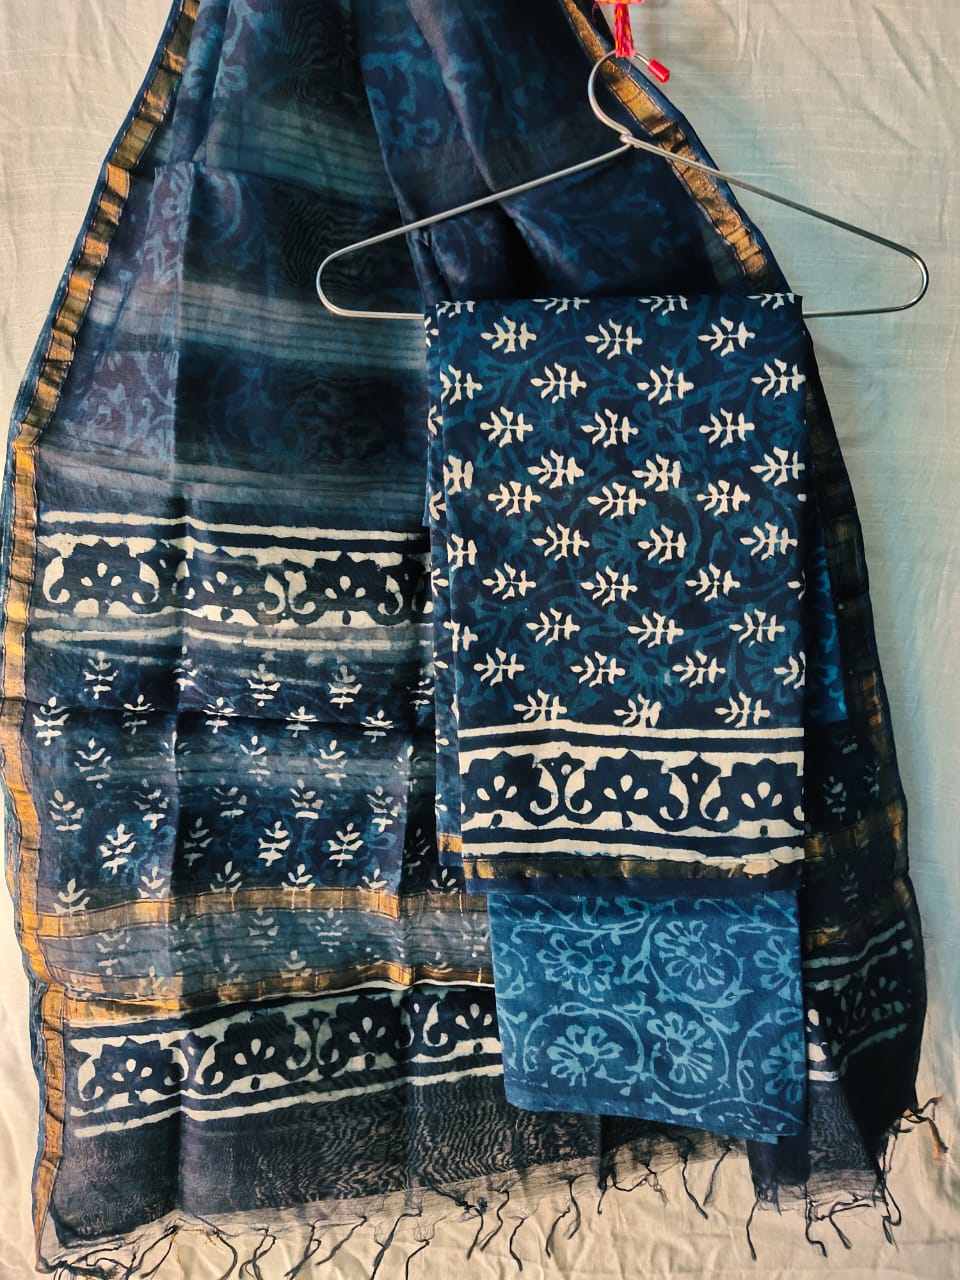 Indigo Chanderi Silk Top & Dupatta With Cotton Bottom - HandBlock Printed Salwar Suit Set - JBXCS24